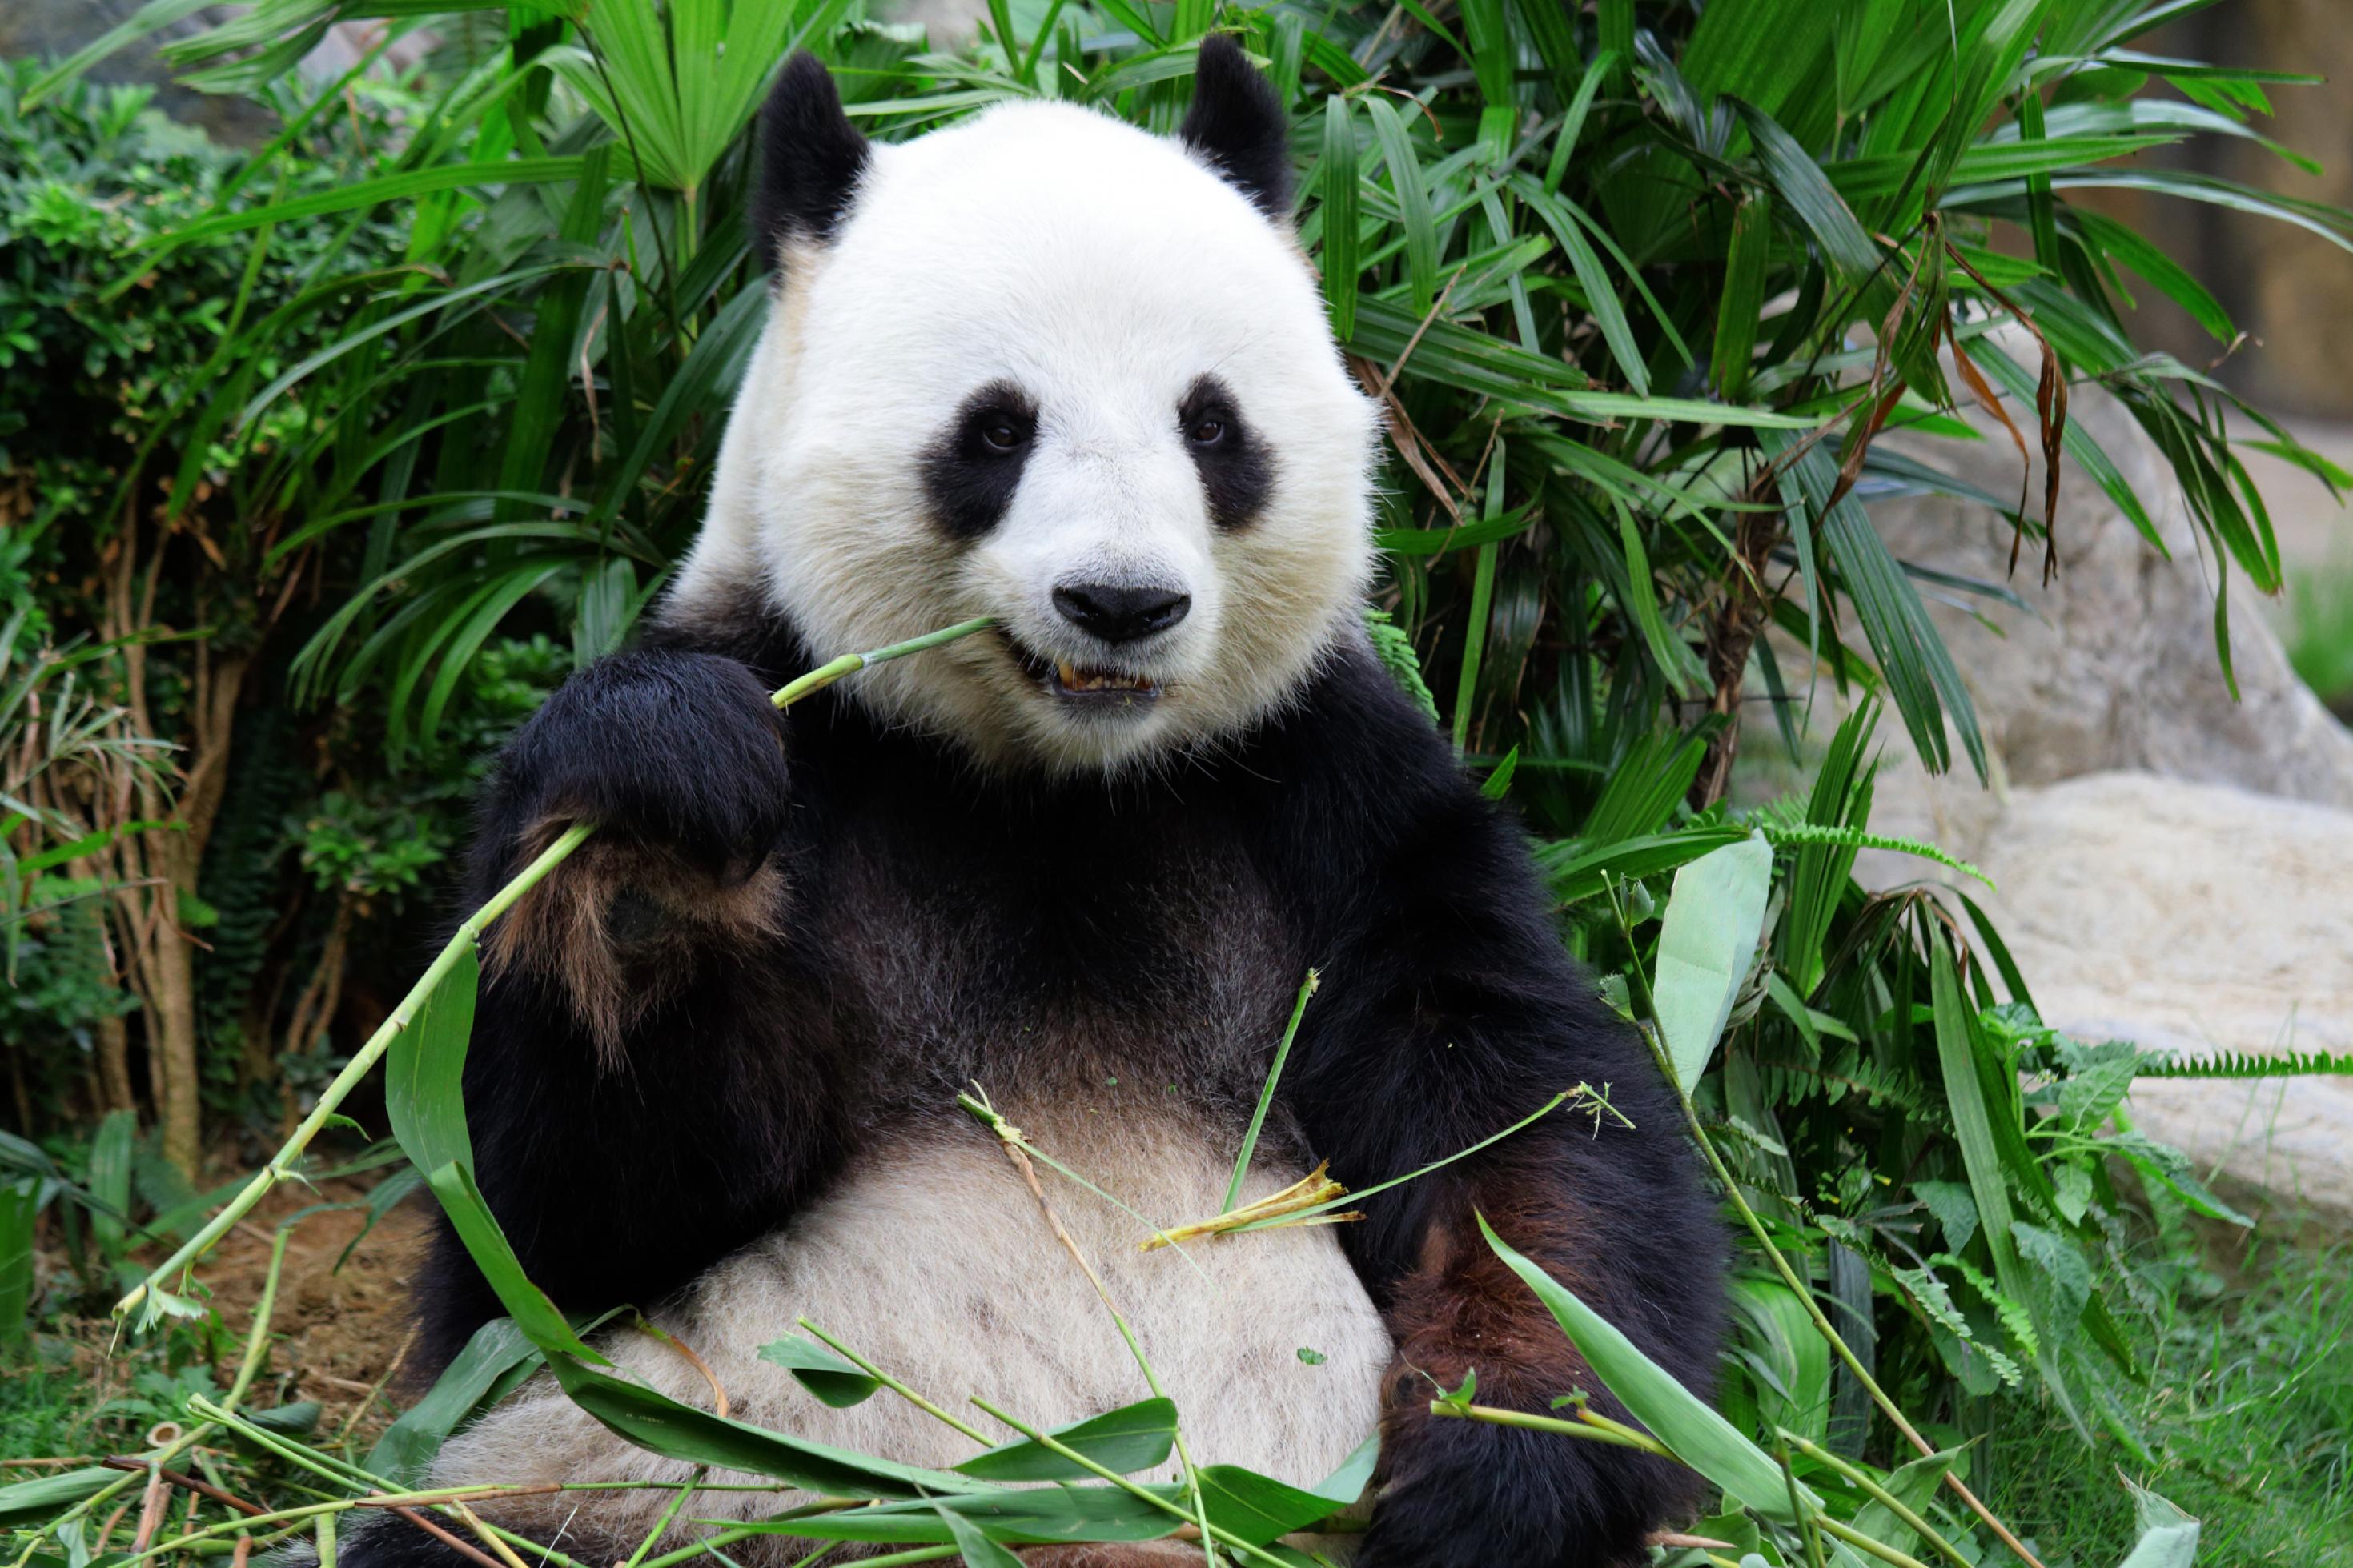 EIn Pandabär frisst Bambus